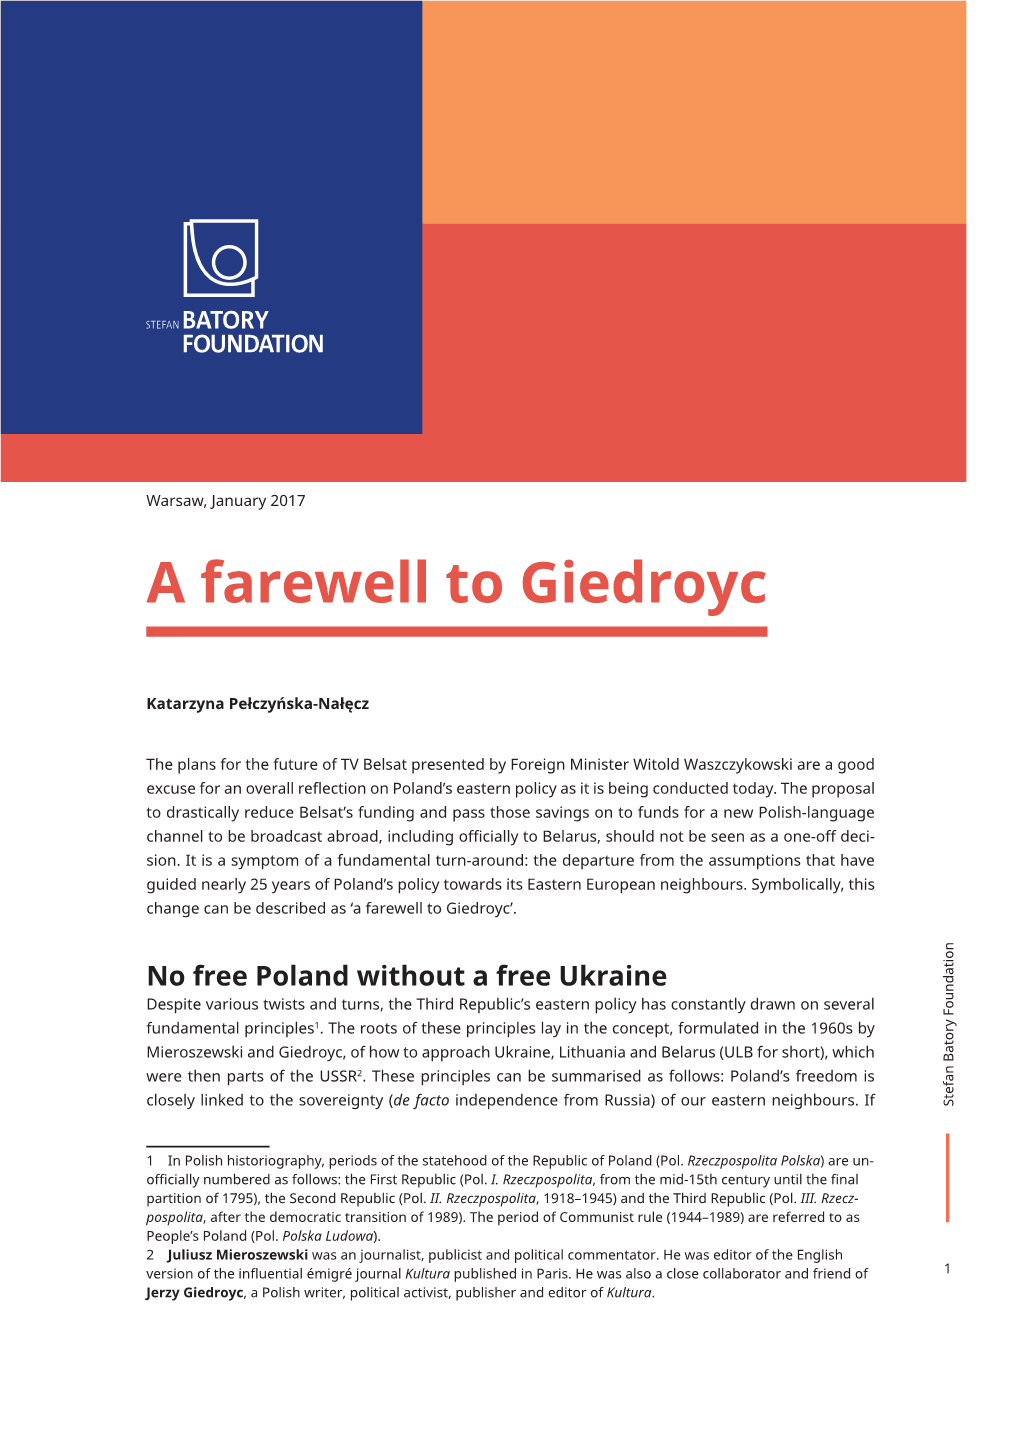 A Farewell to Giedroyc